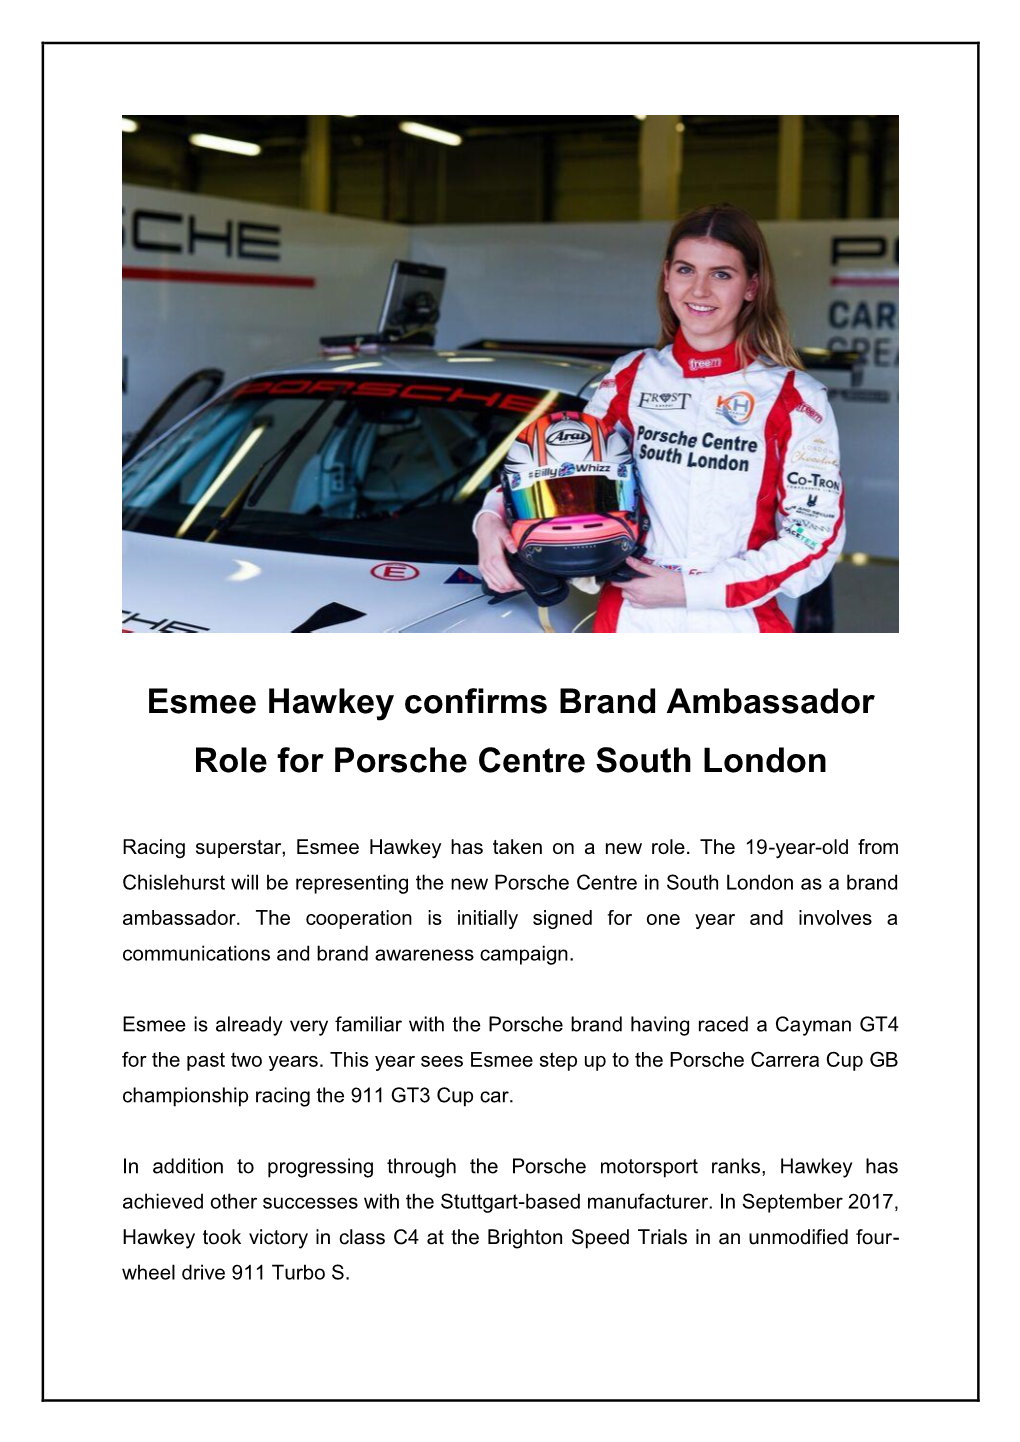 Esmee Hawkey Confirms Brand Ambassador Role for Porsche Centre South London